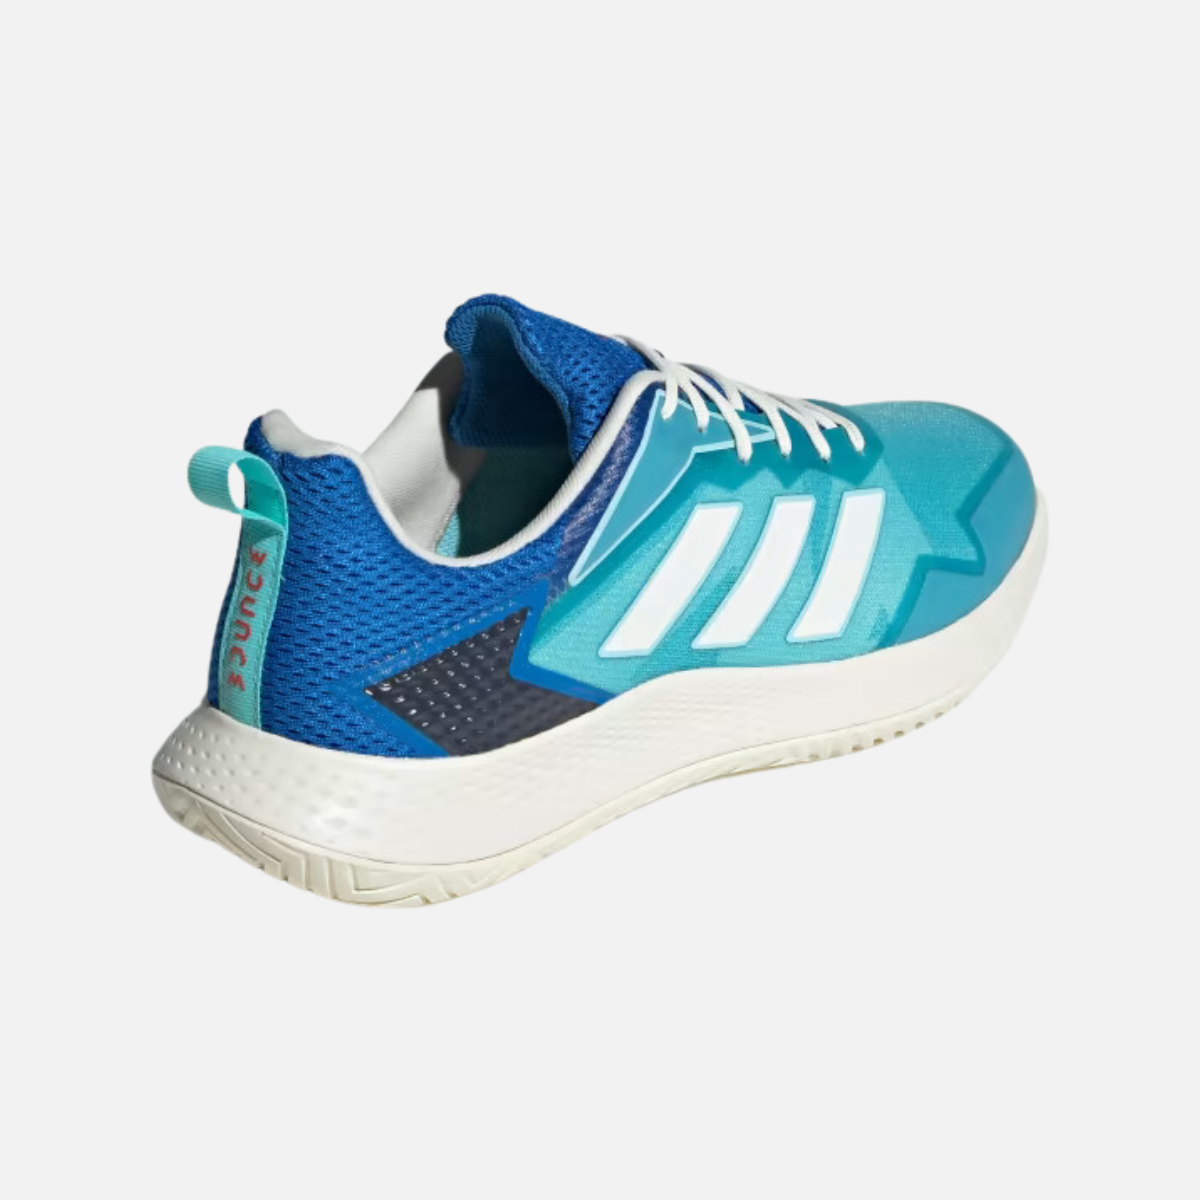 Adidas Defiant Speed Men's Tennis Shoes -Light Aqua/Off White/Bright Royal